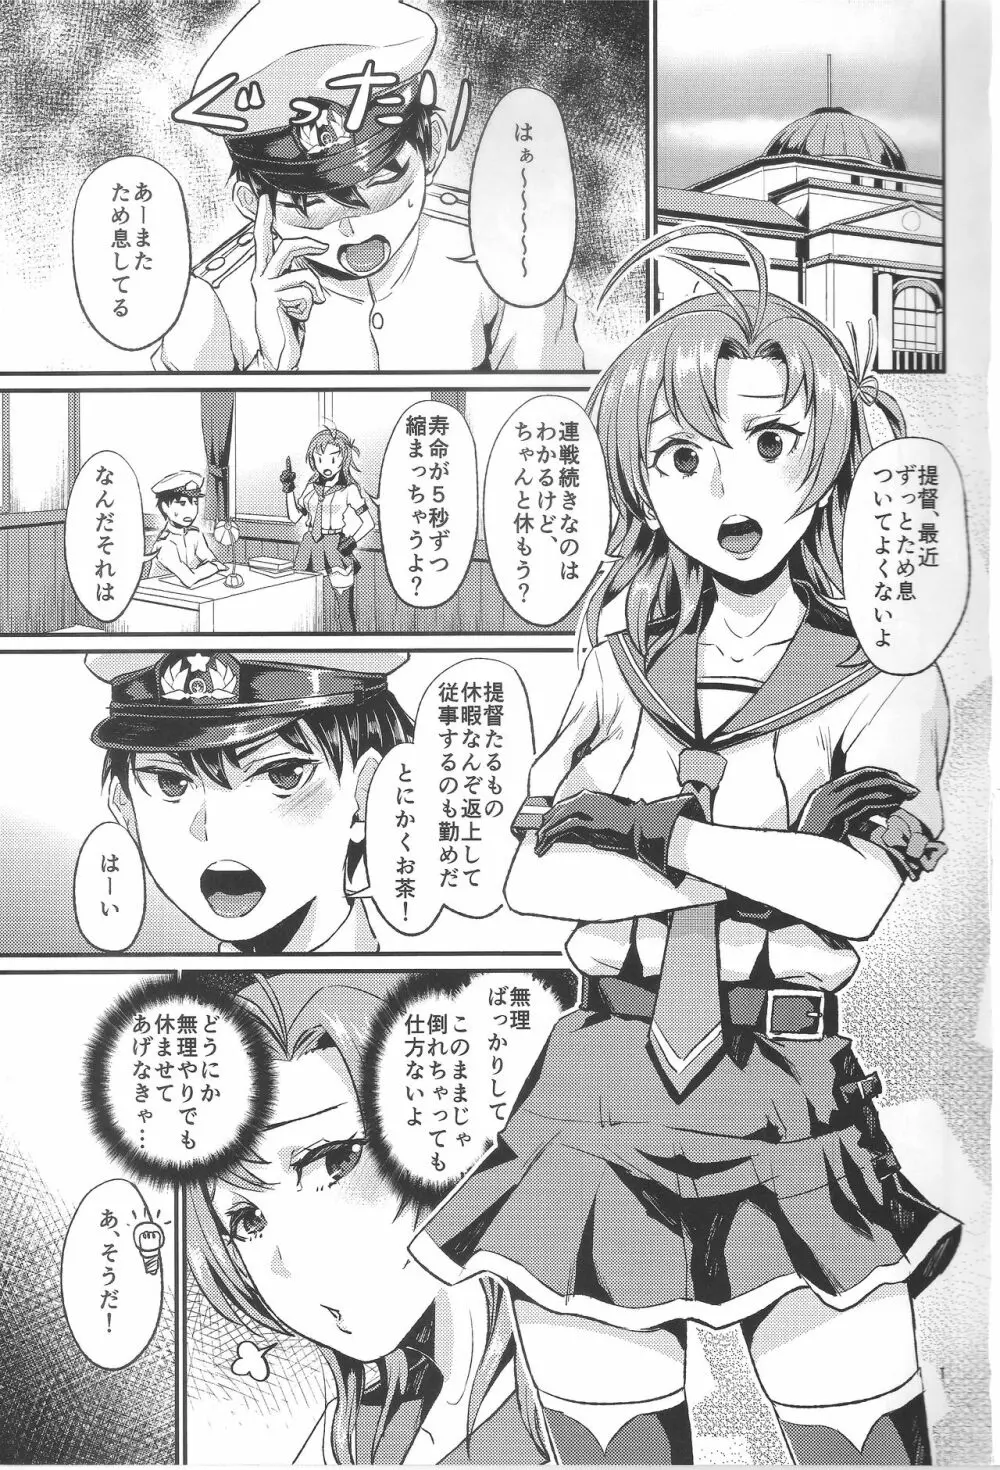 NON STOP! 衣笠さん - page2